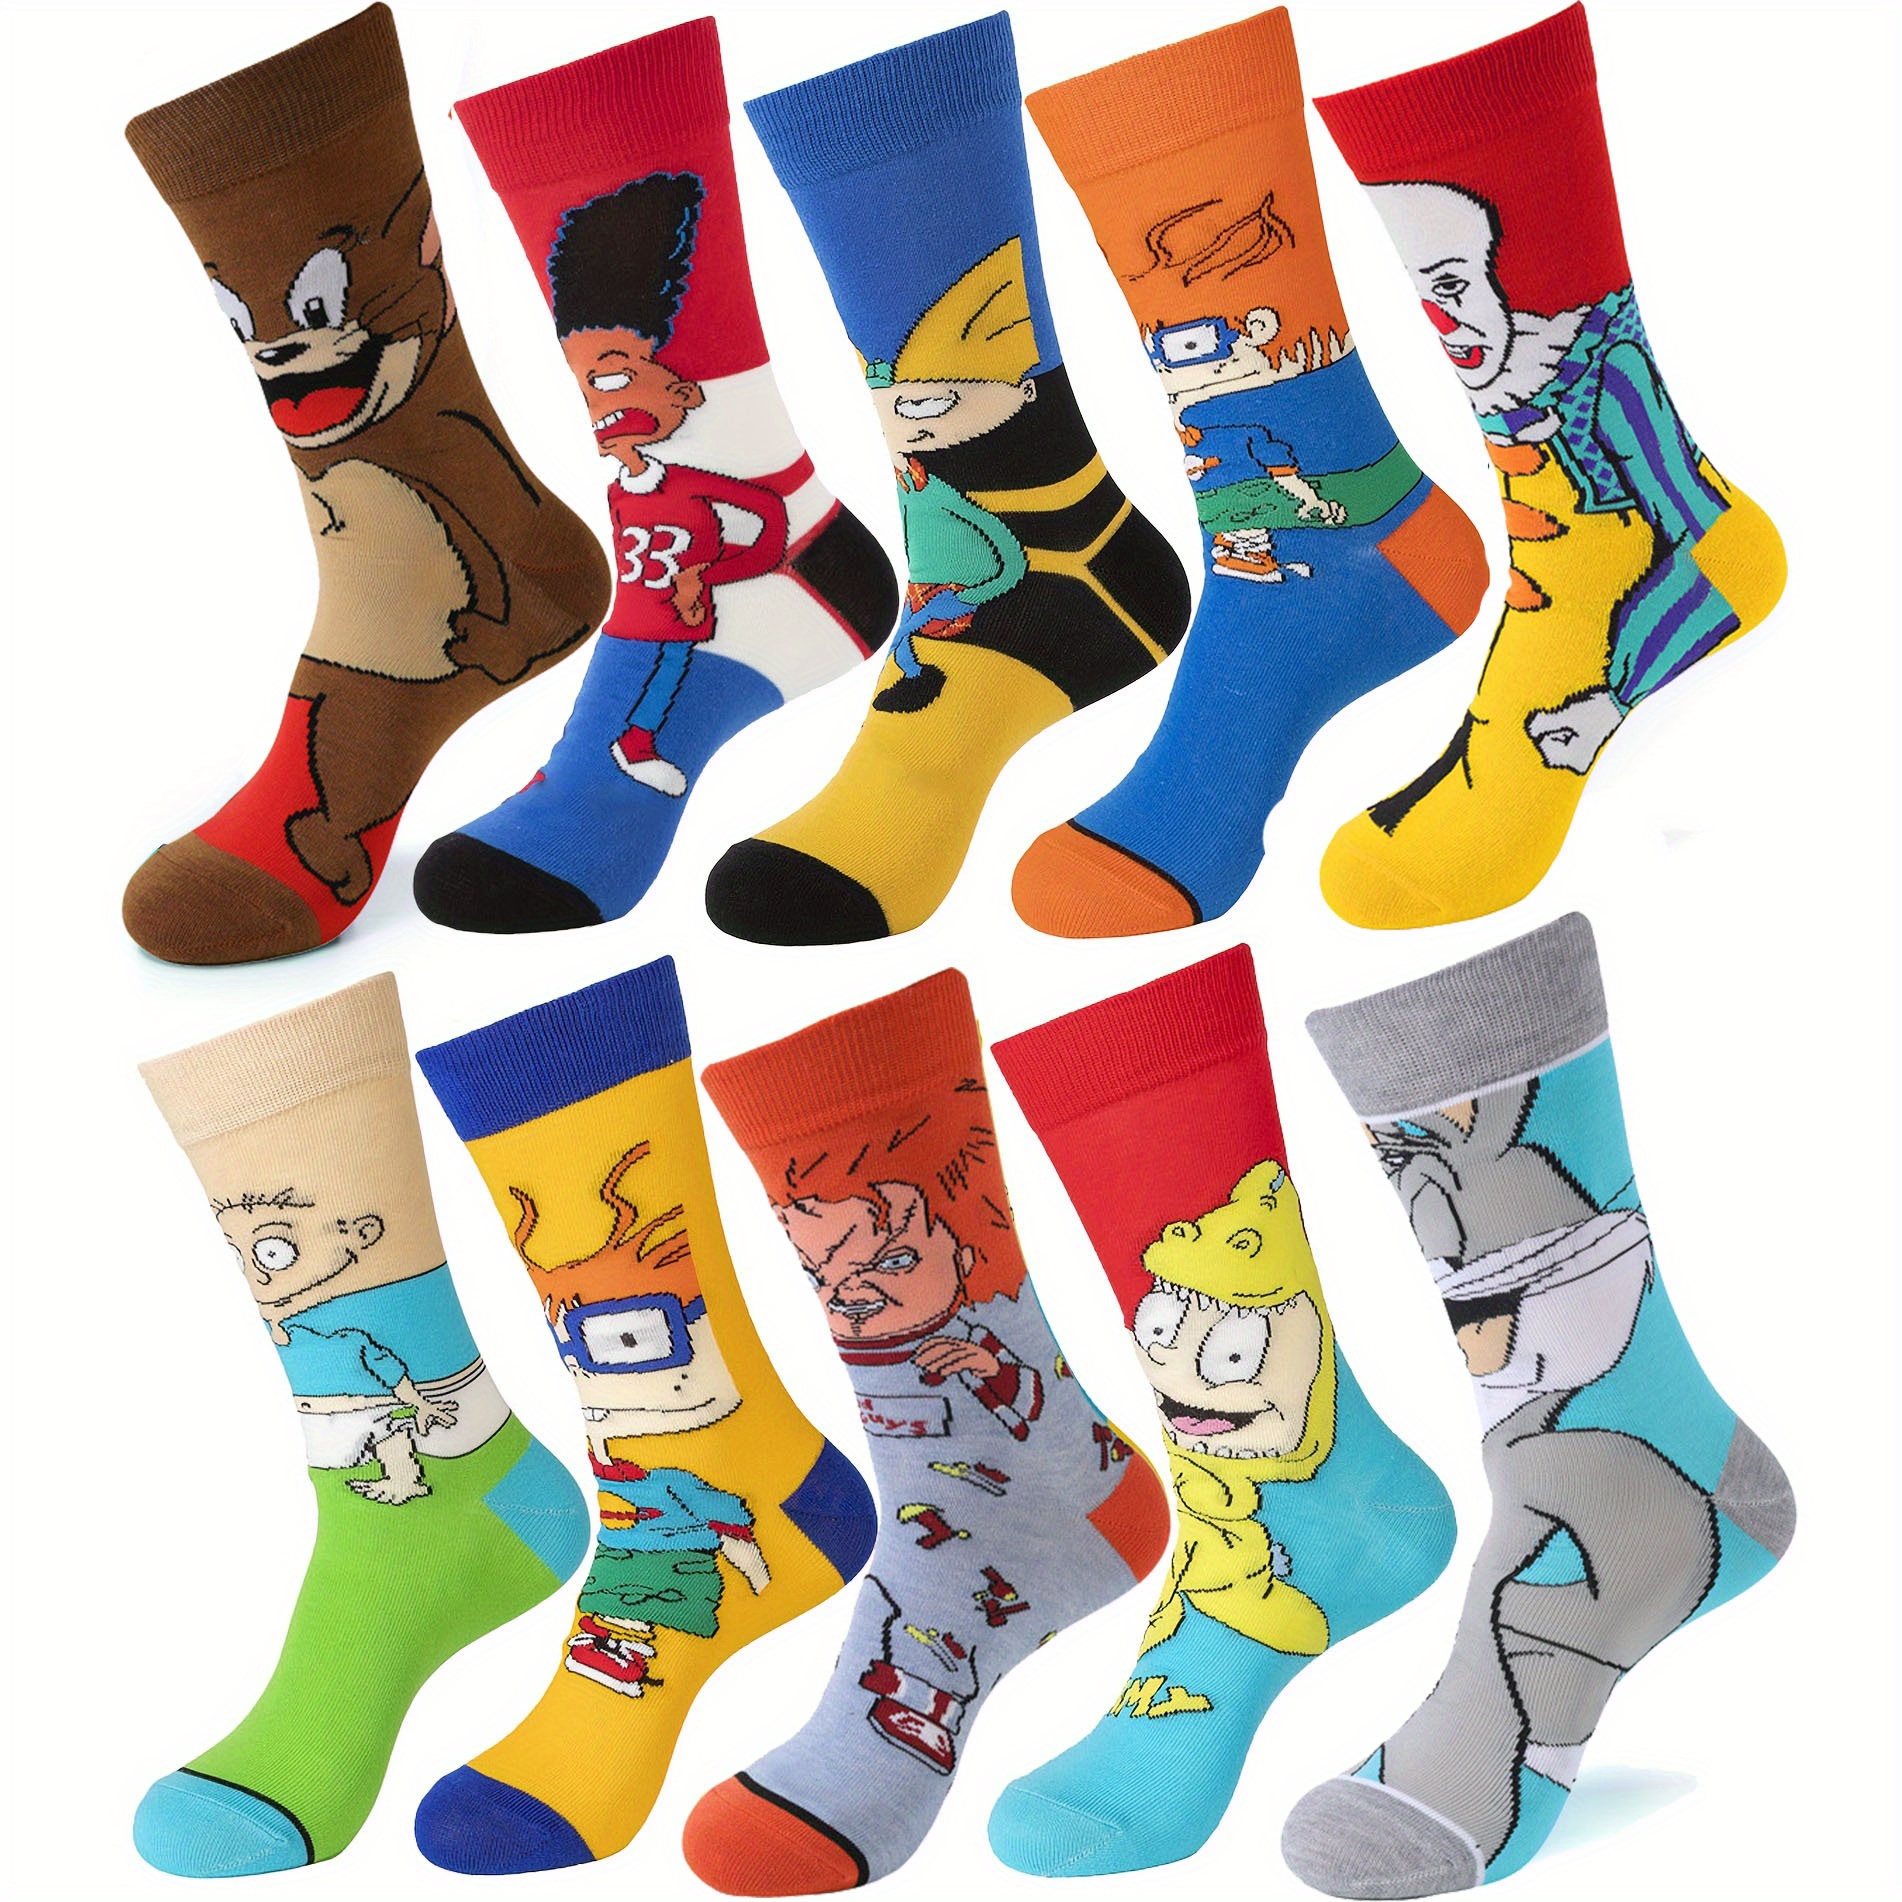 SPONGEBOB SQUAREPANTS Men's CHRISTMAS Socks